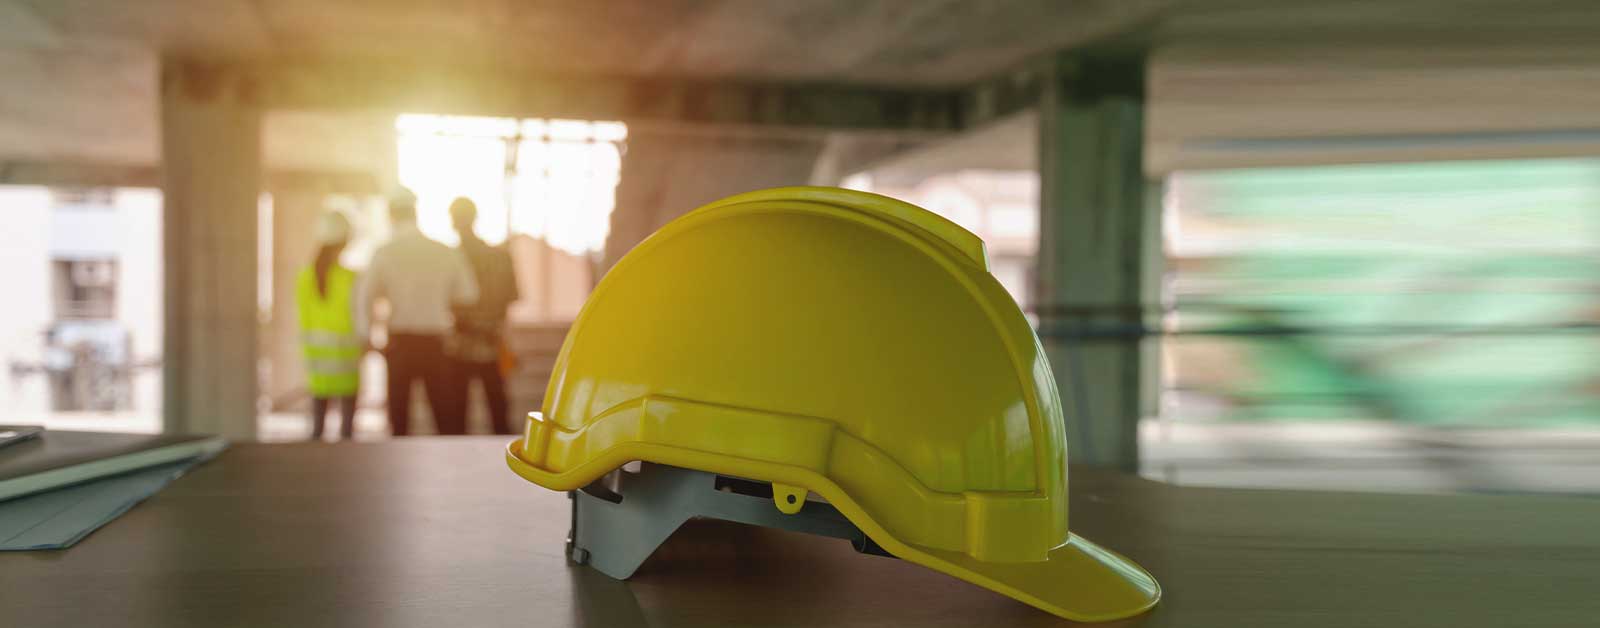 Construction helmet and engineers